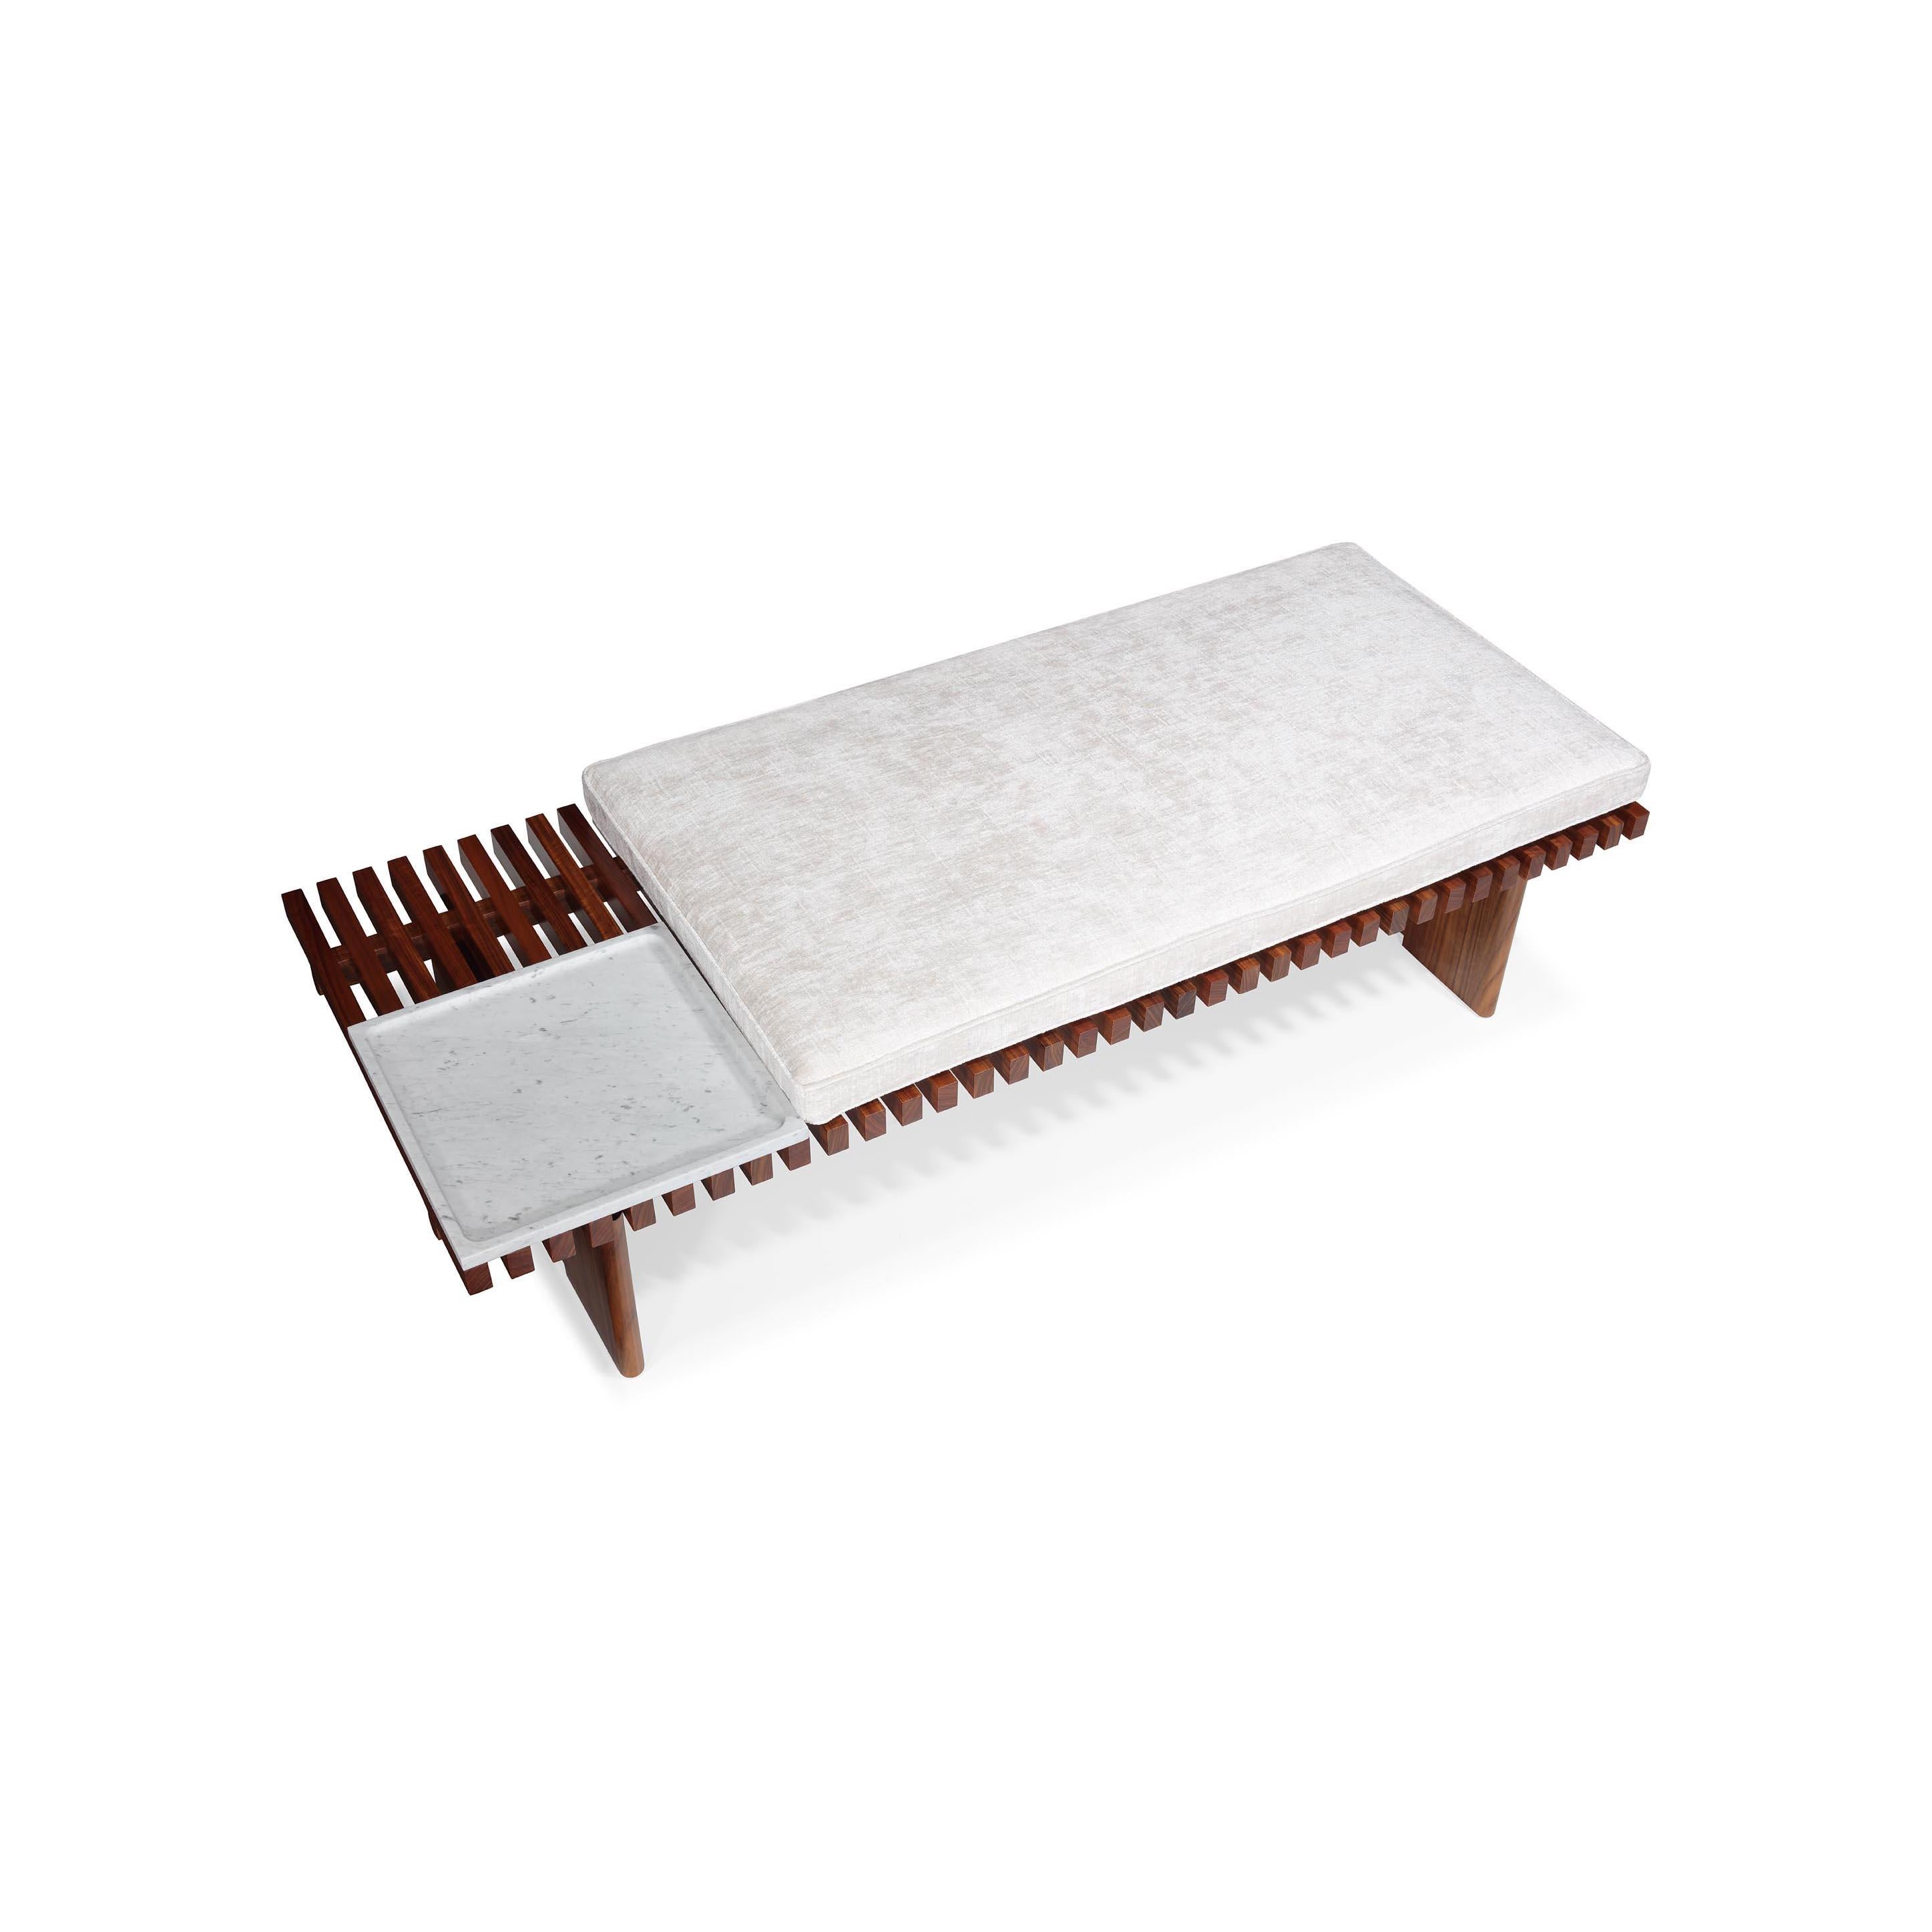 Wood Nokogiri Coffee Table Bench For Sale